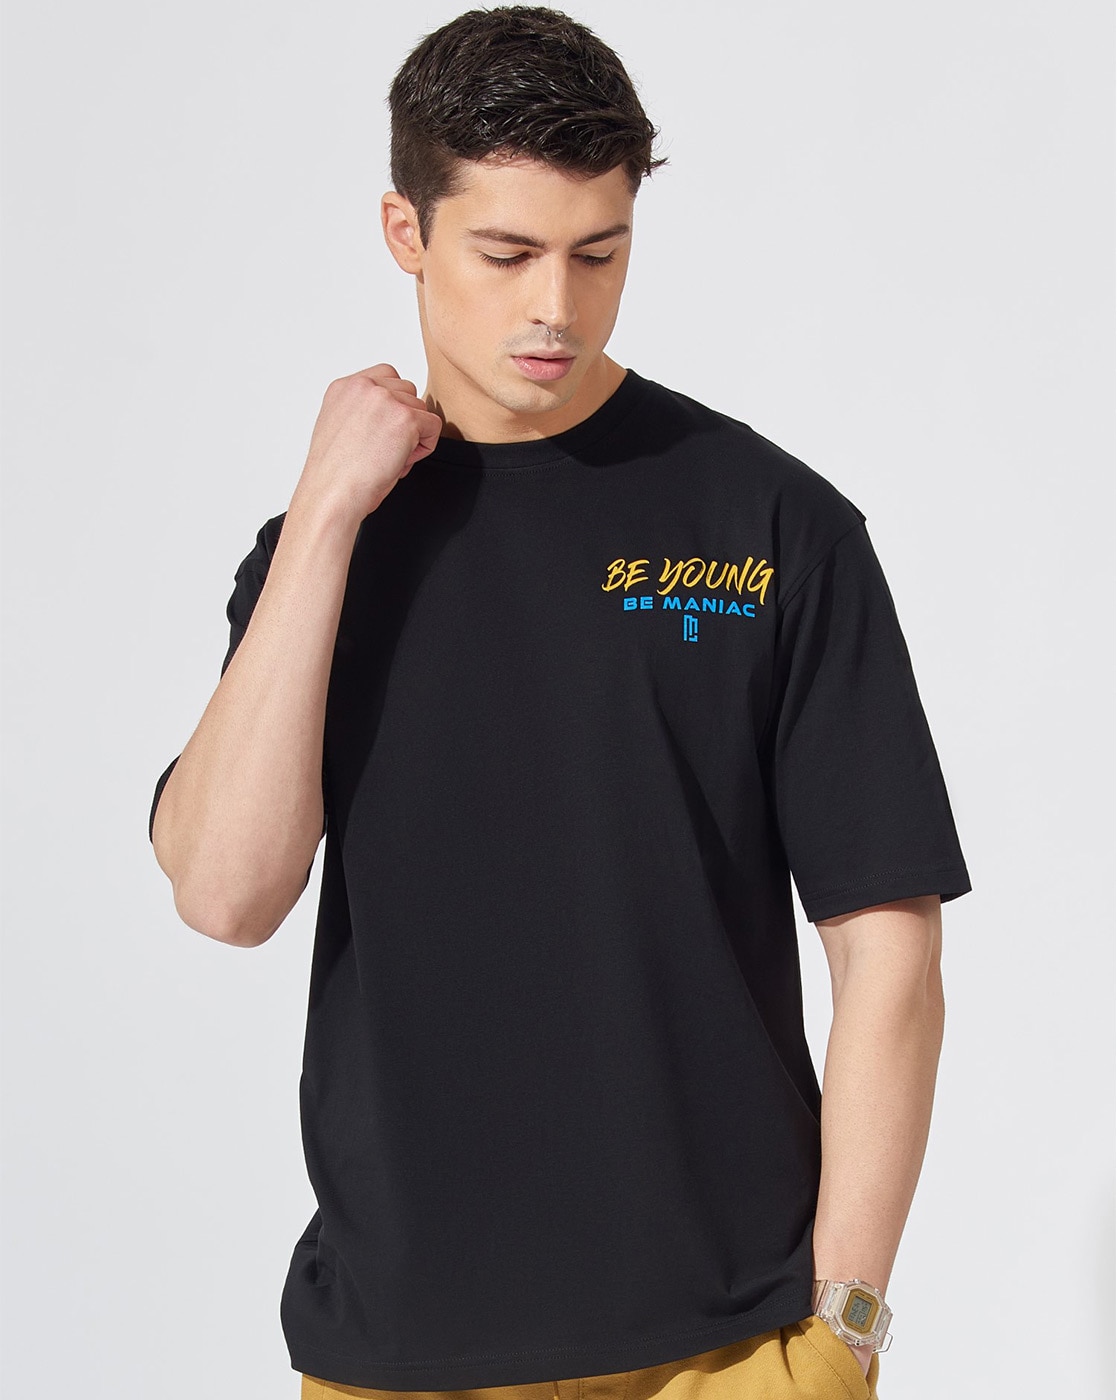 Buy Black Tshirts for Men by MANIAC Online